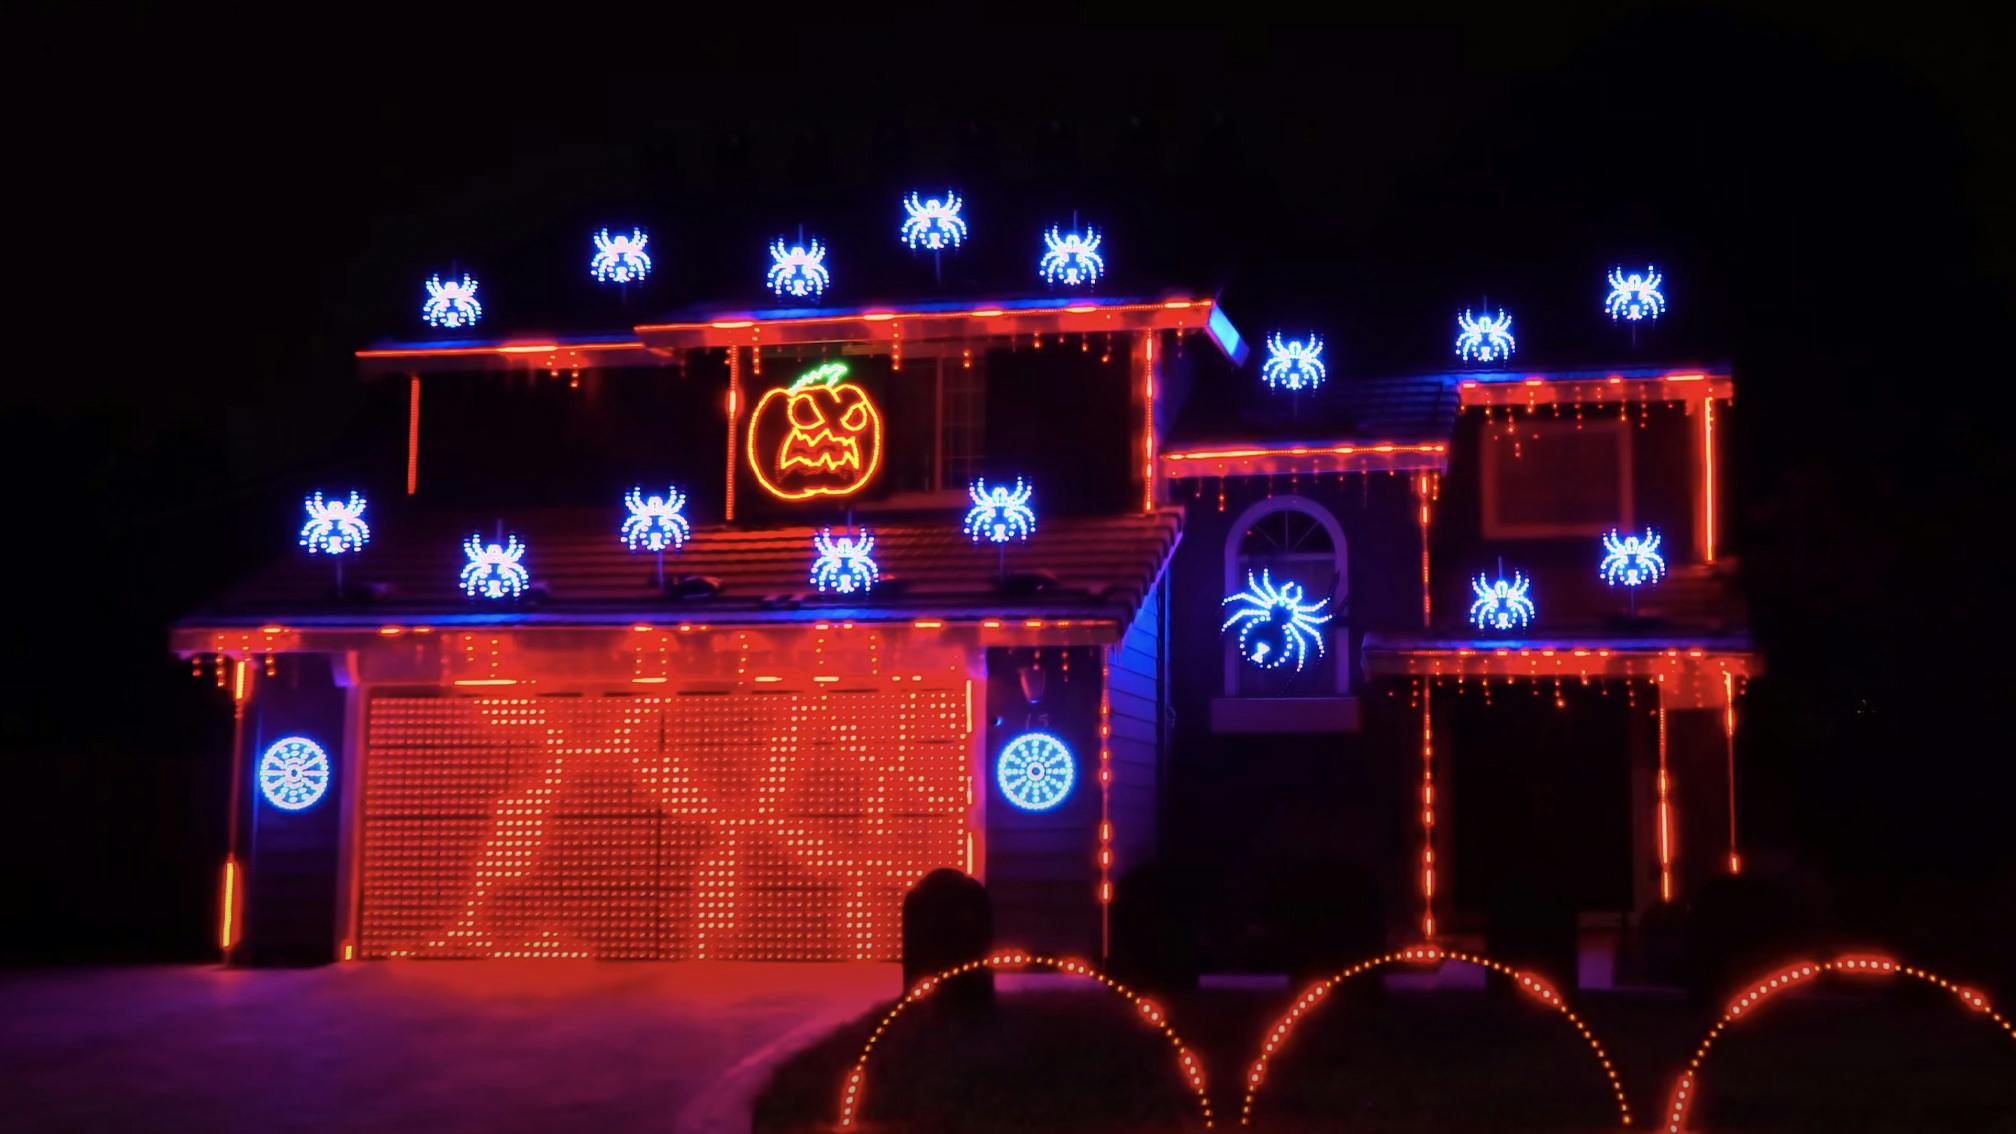 This Enter Sandman-Themed Halloween Light Show Is Spectacular